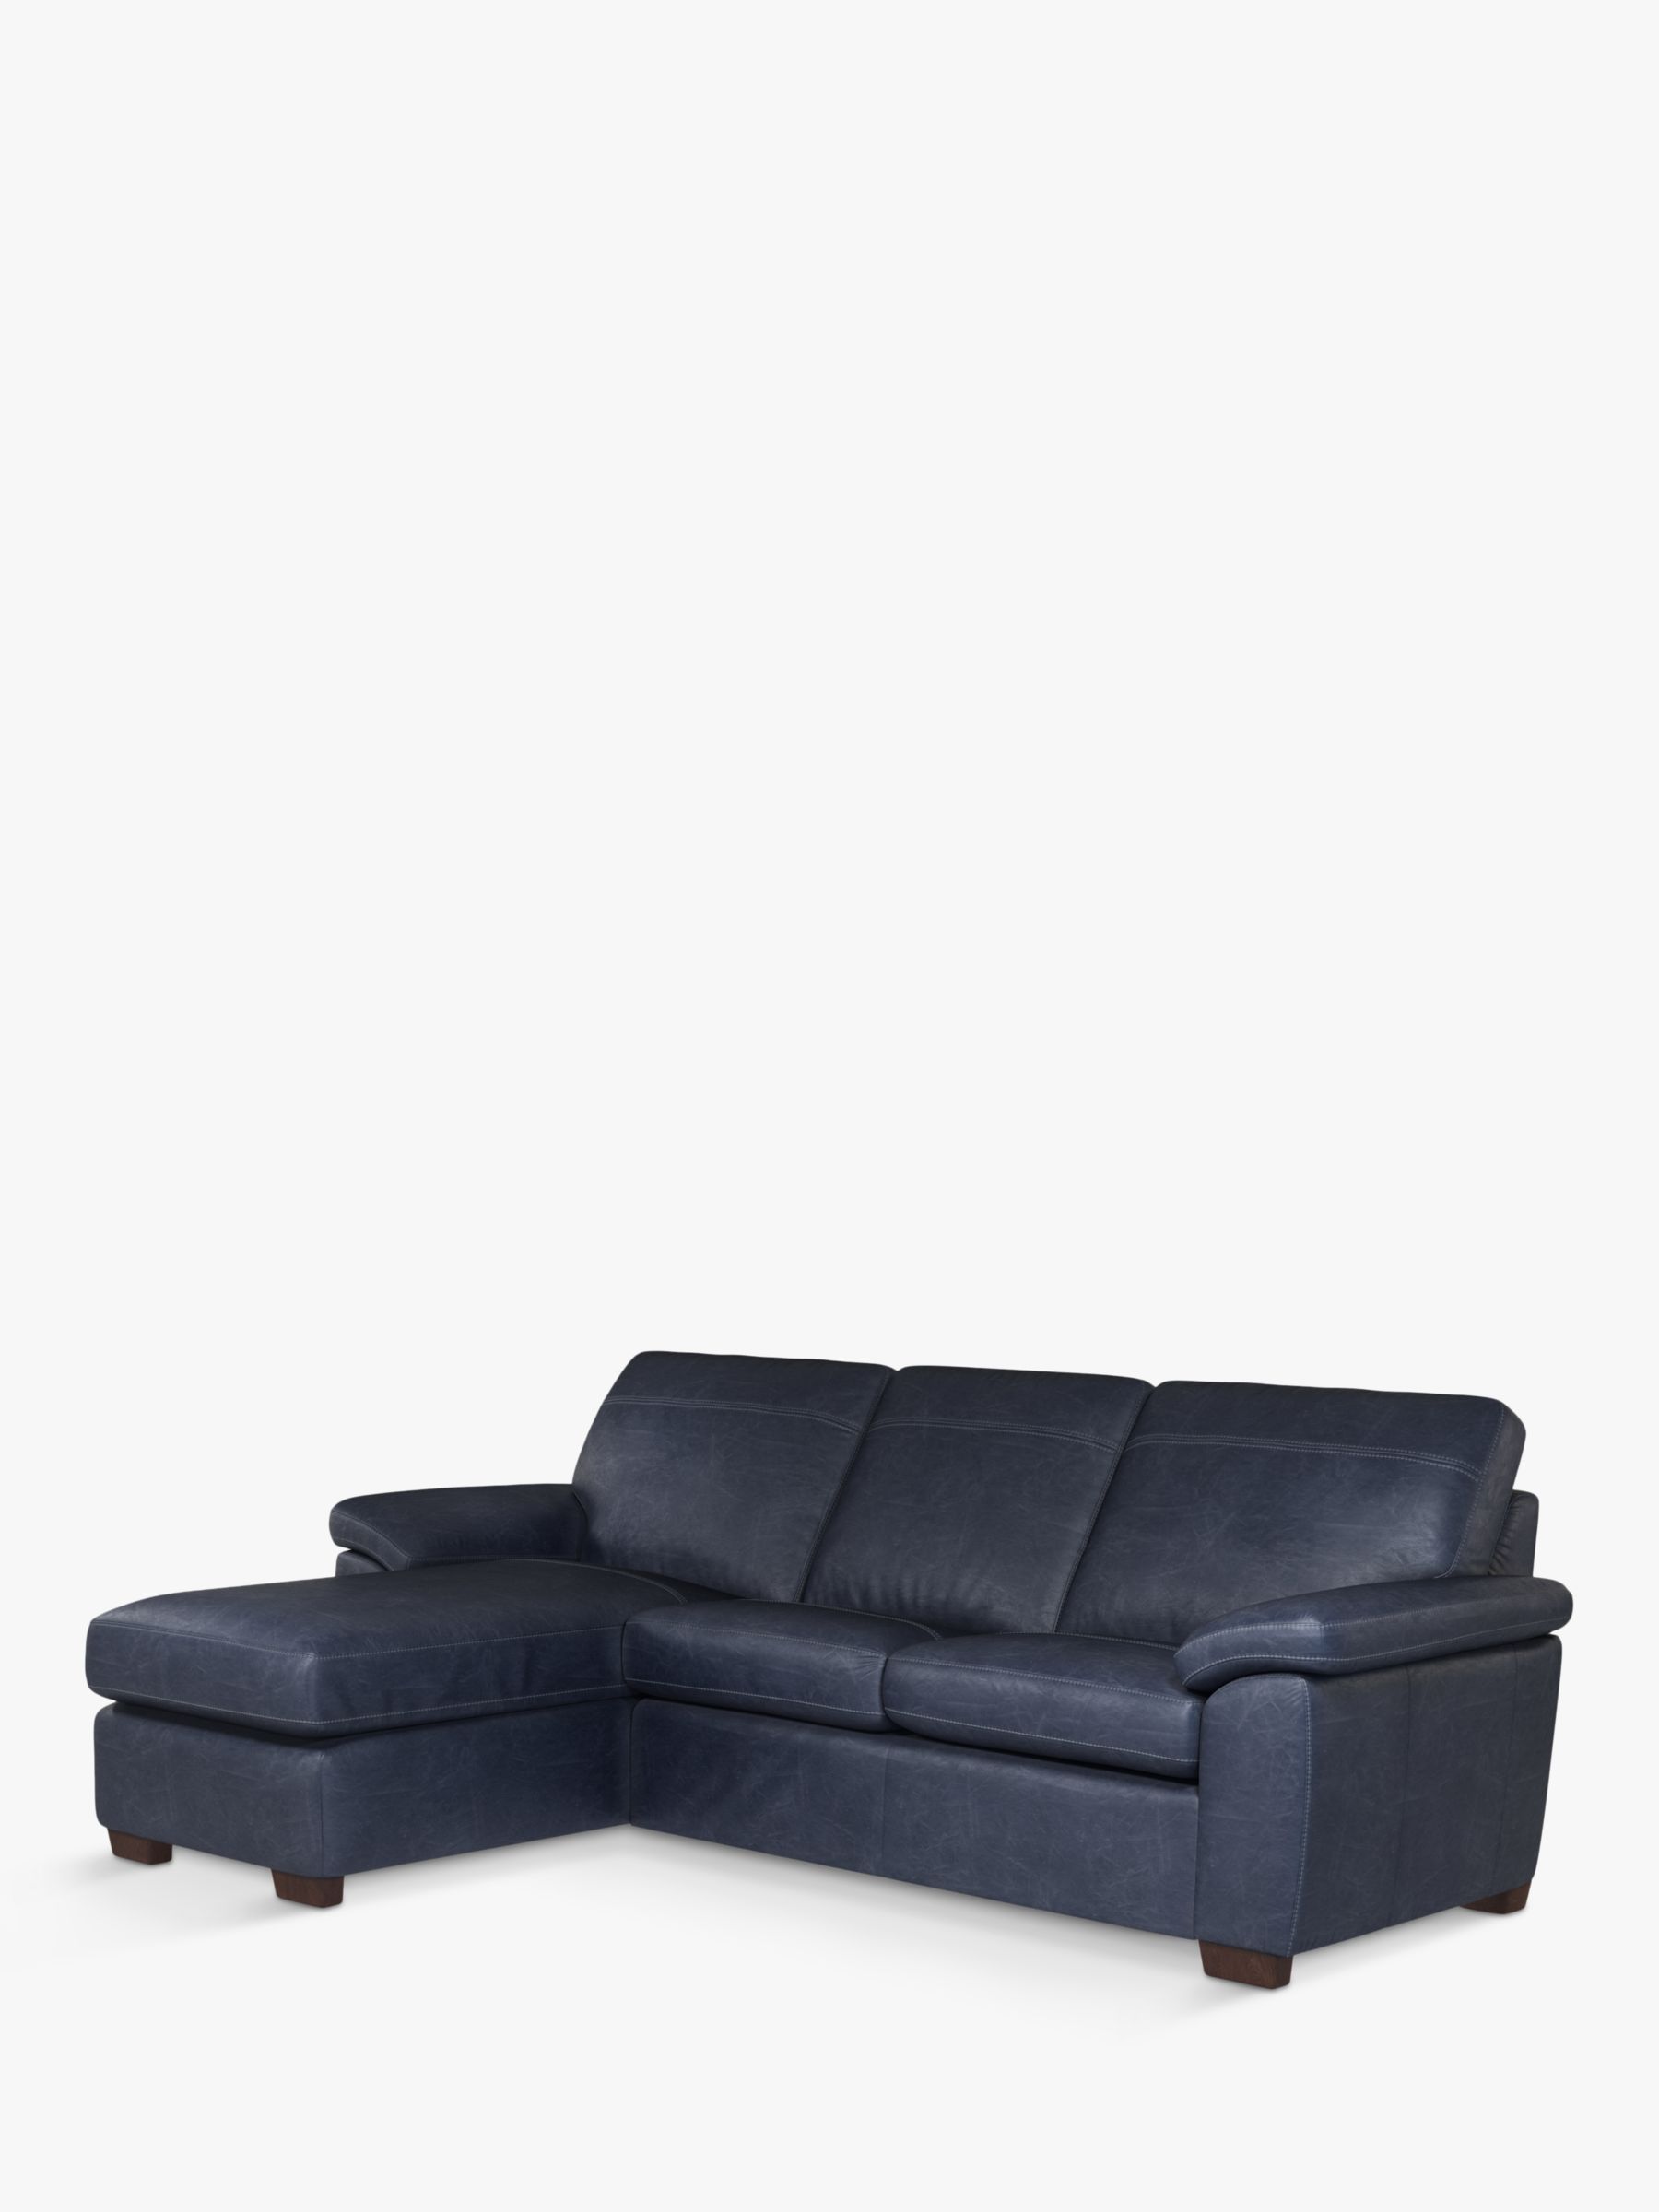 Camden Range, John Lewis Camden LHF Storage Chaise End Leather Sofa Bed, Dark Leg, Sellvagio Blue